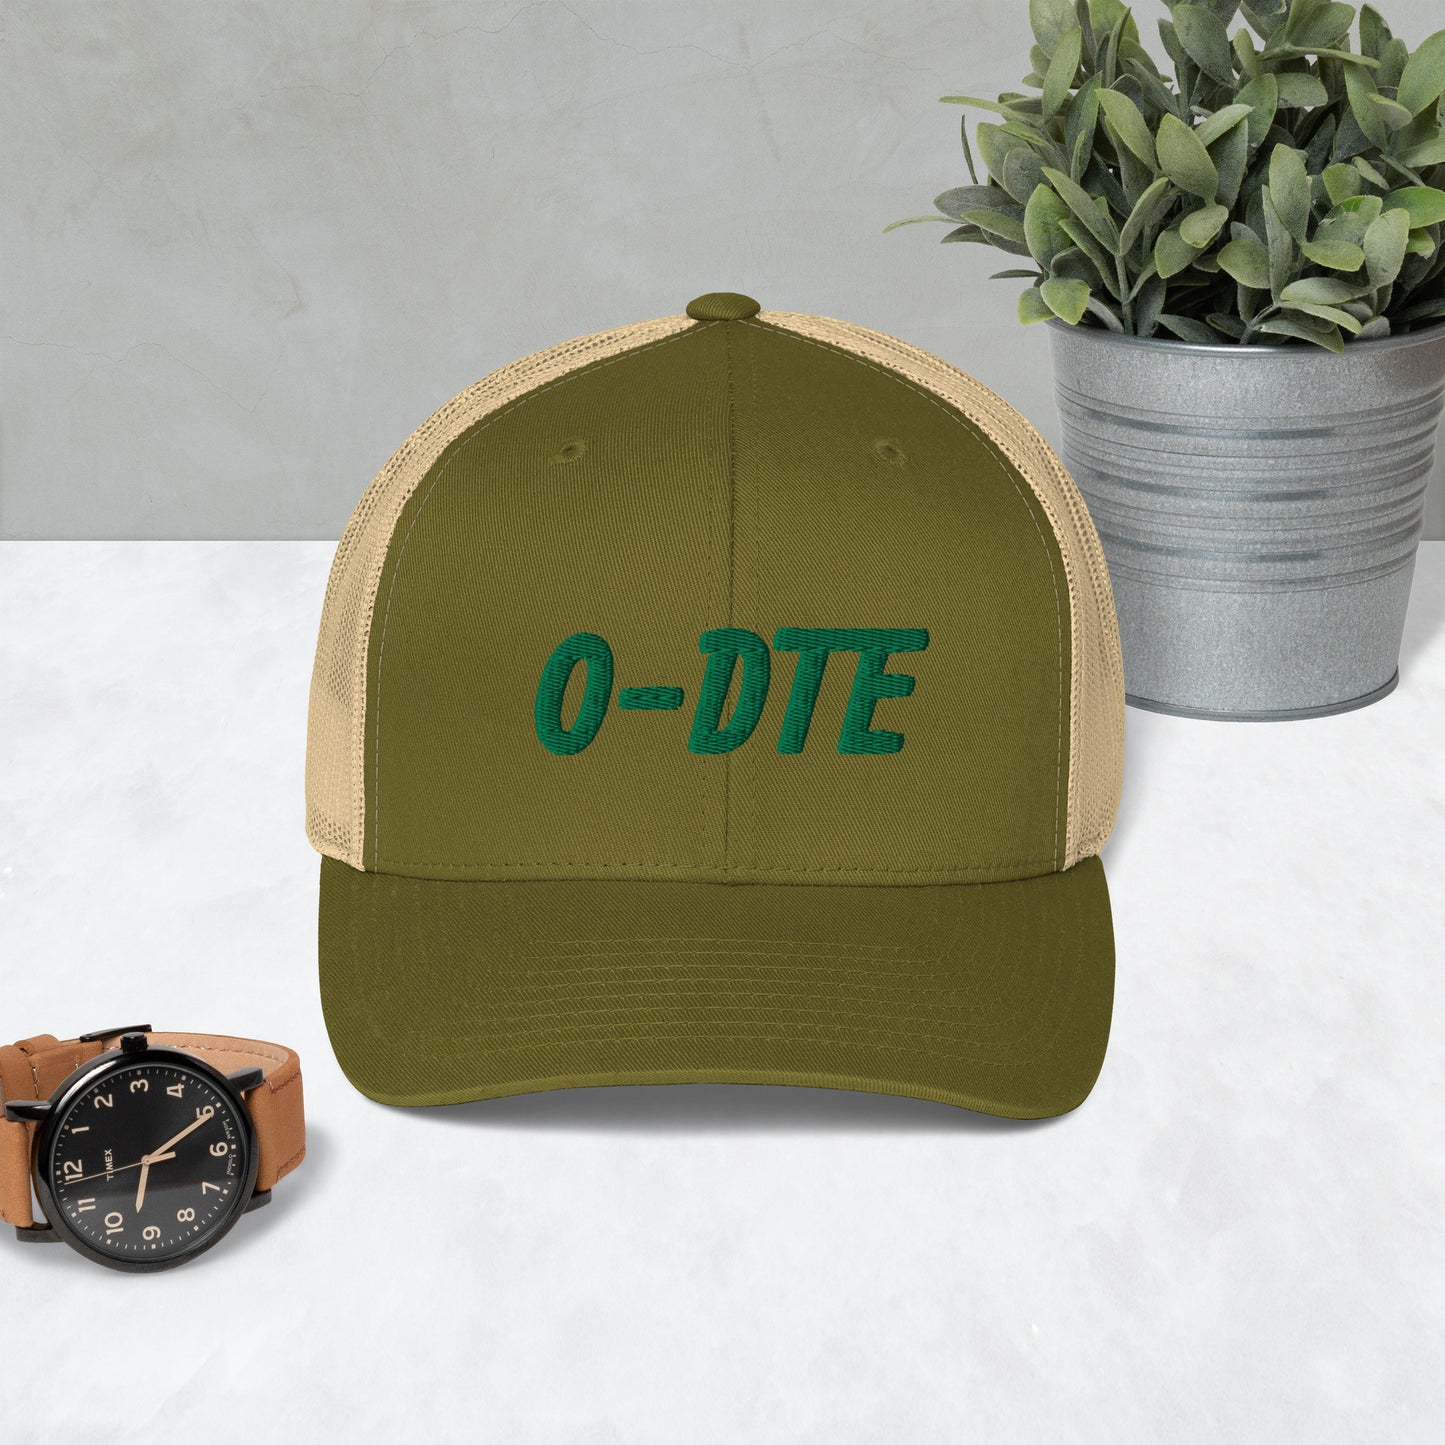 0-DTE Trucker Hat